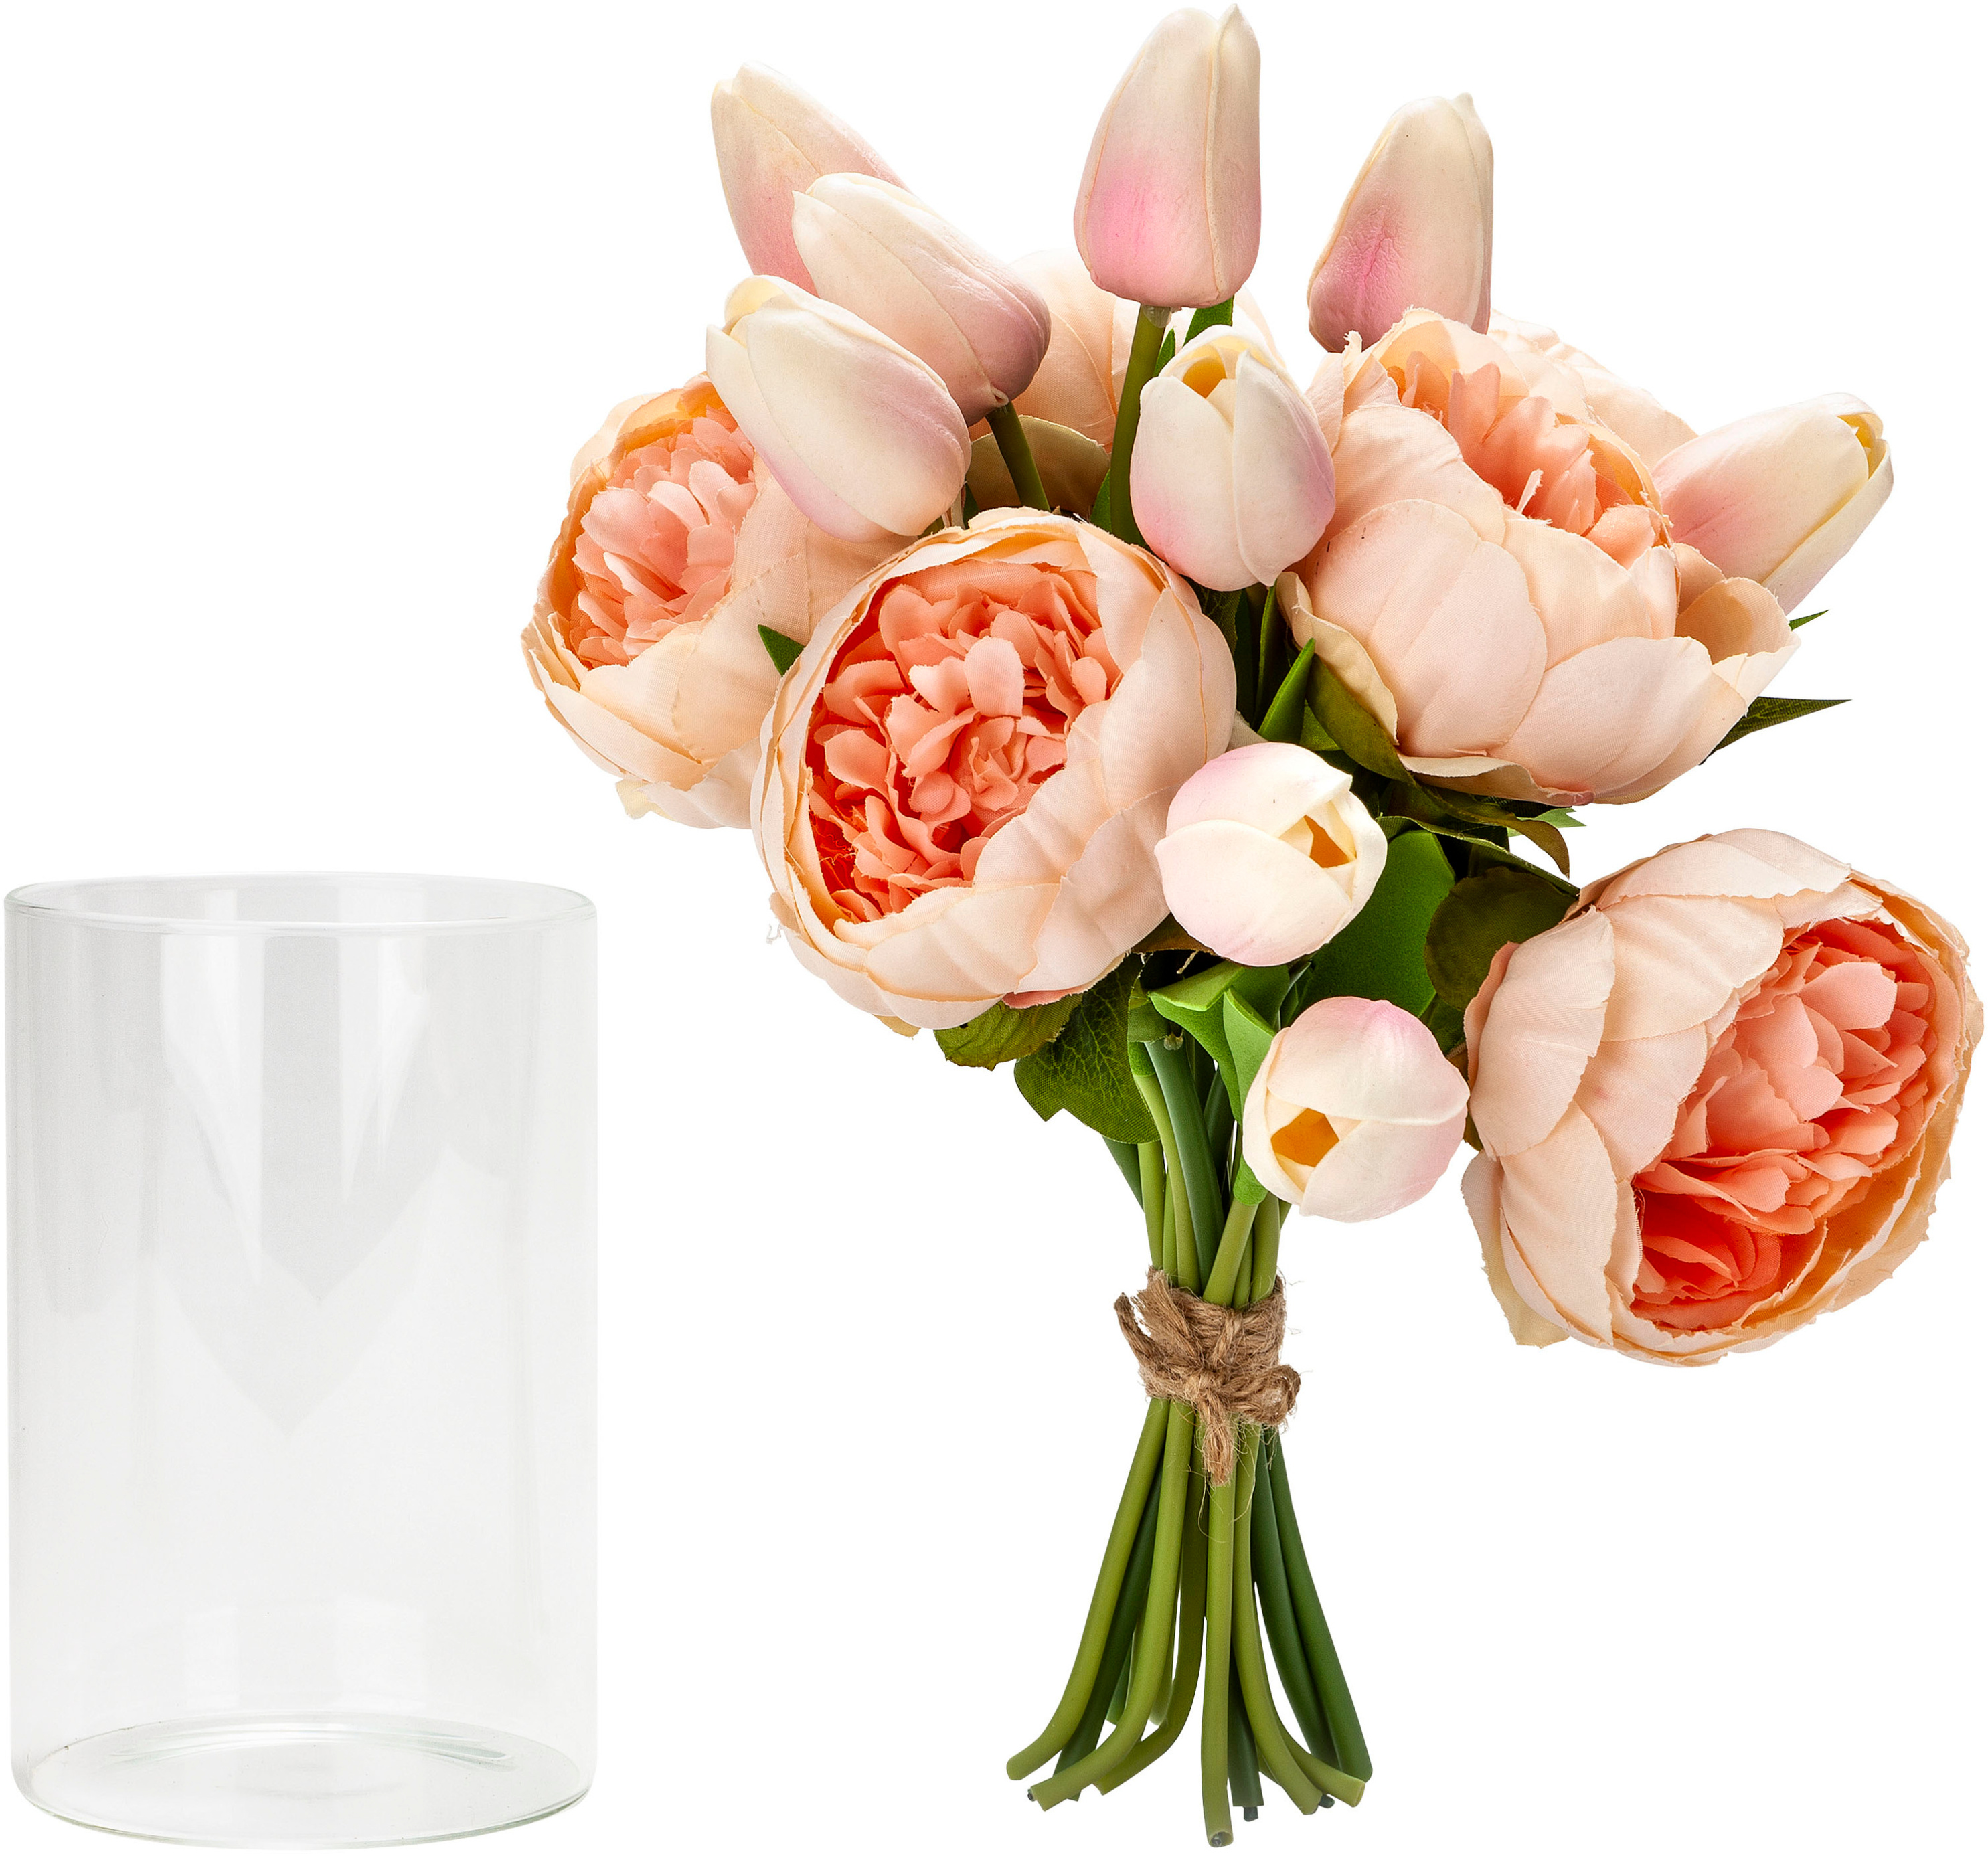 Kunstblumen Strauß Pfingstrosen & Tulpen in Vase